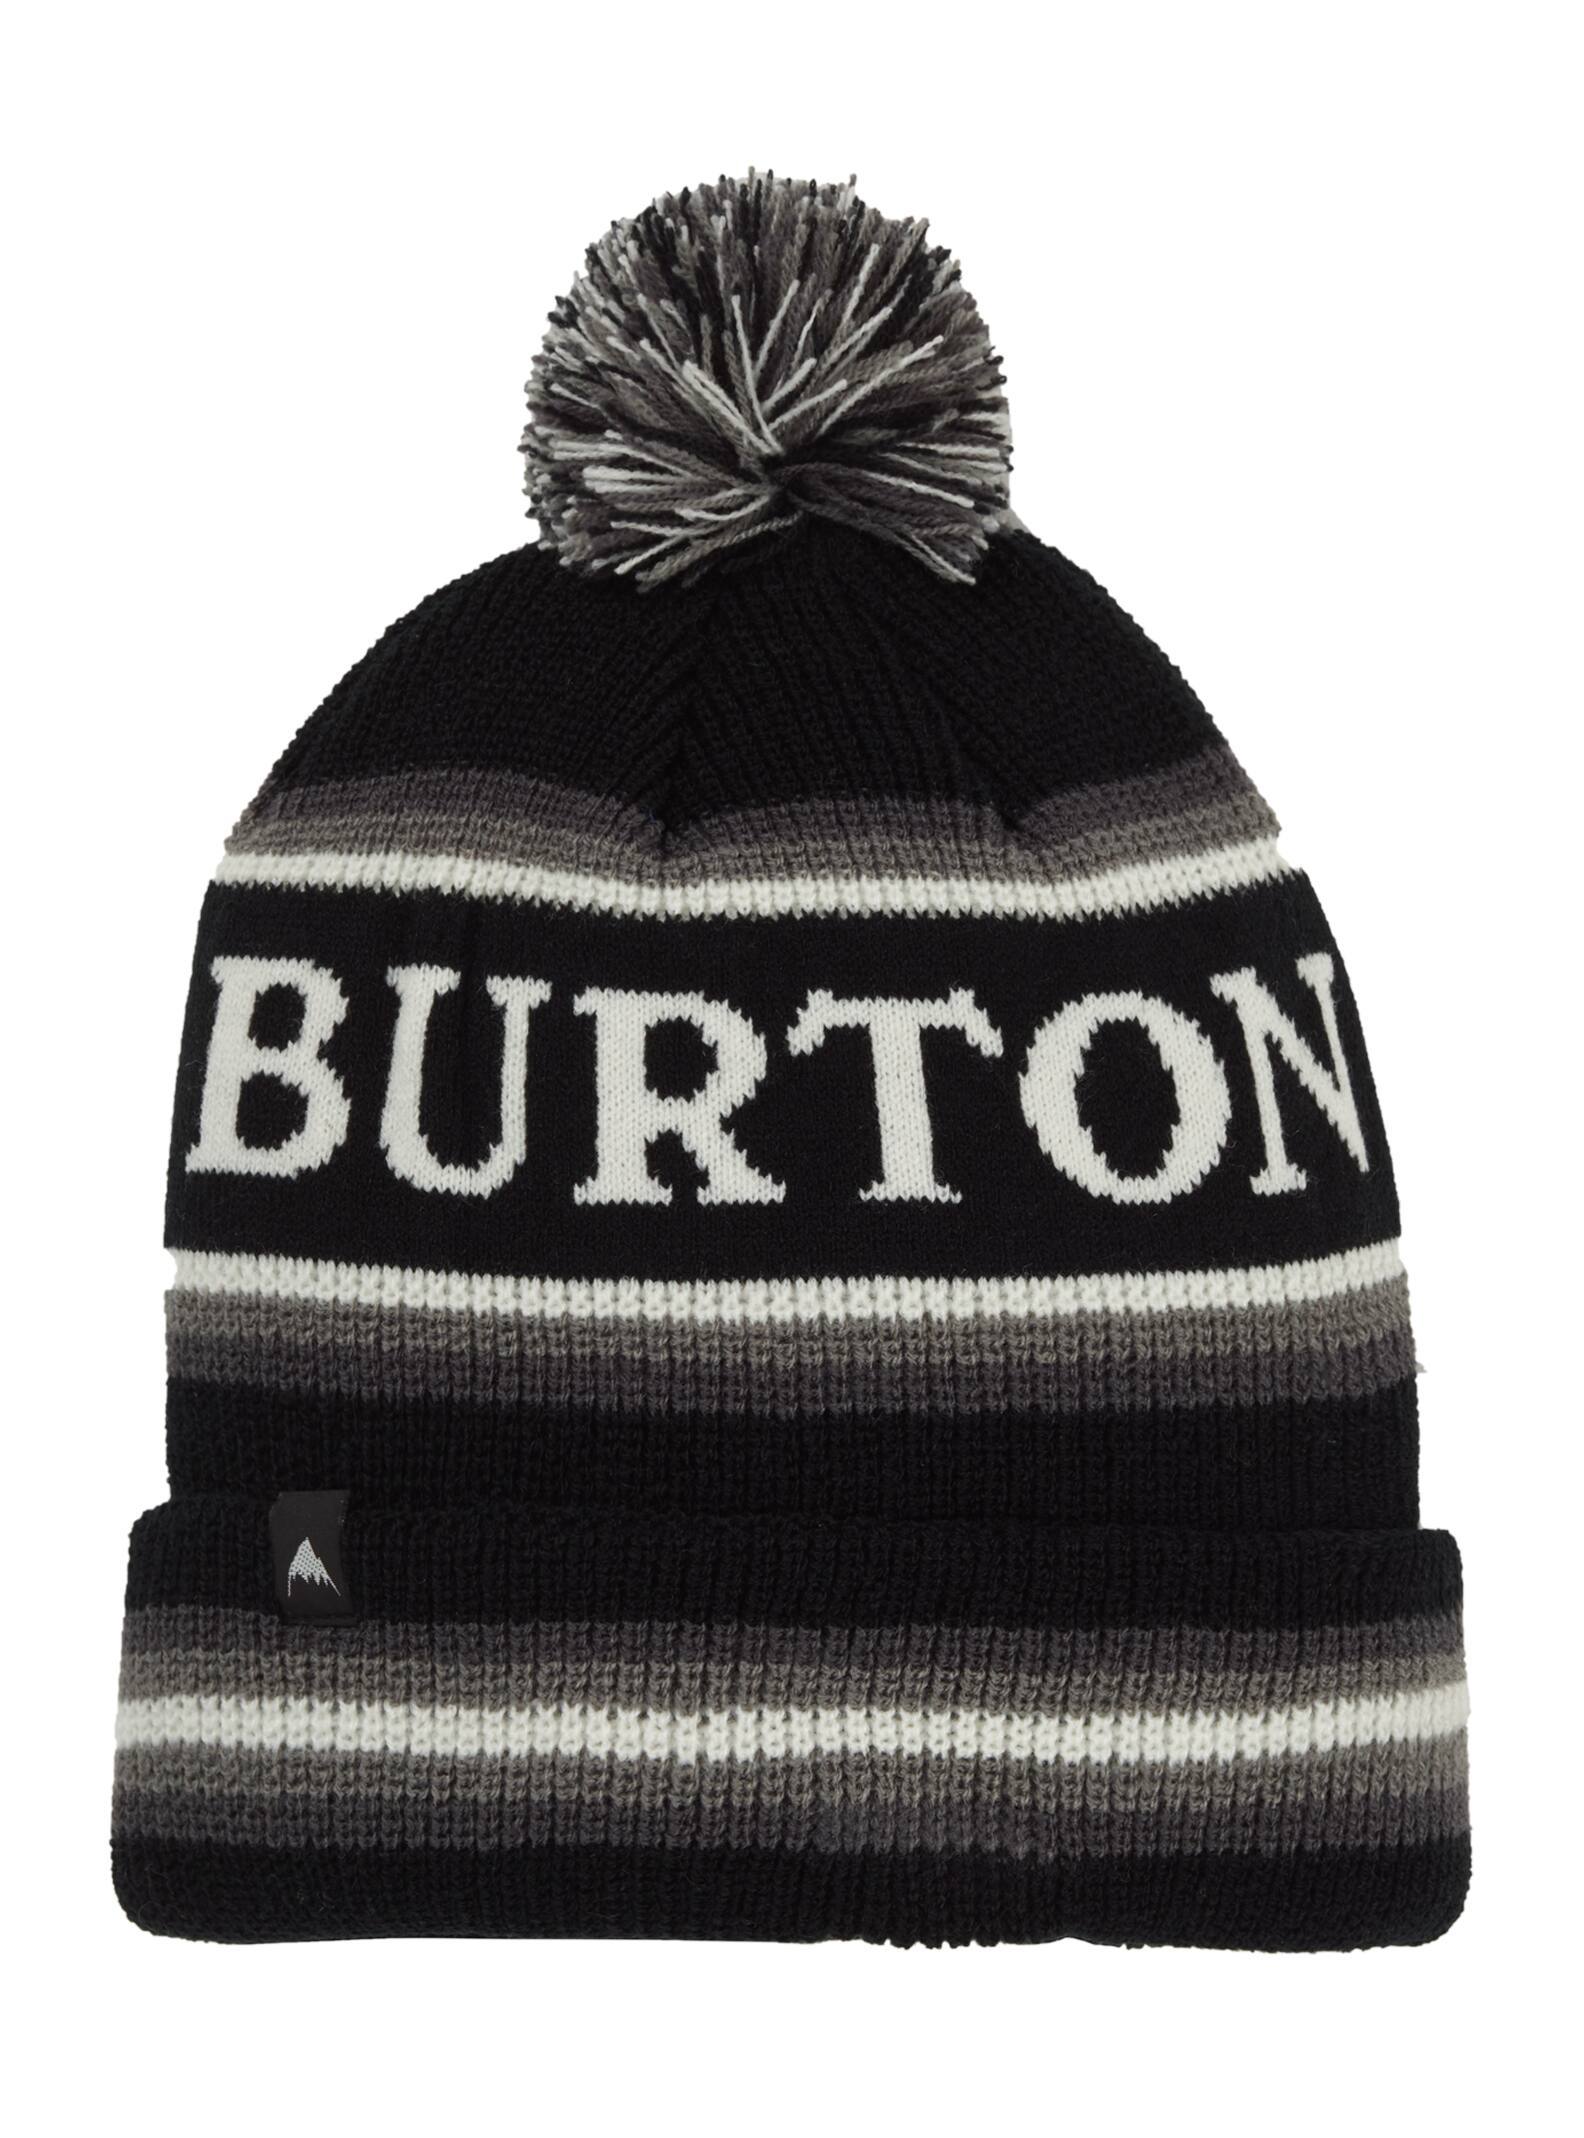 Burton Reversible Purple & Orange Knit Beanie Skull Cap Youth Girls One Size NWT 9009519760390